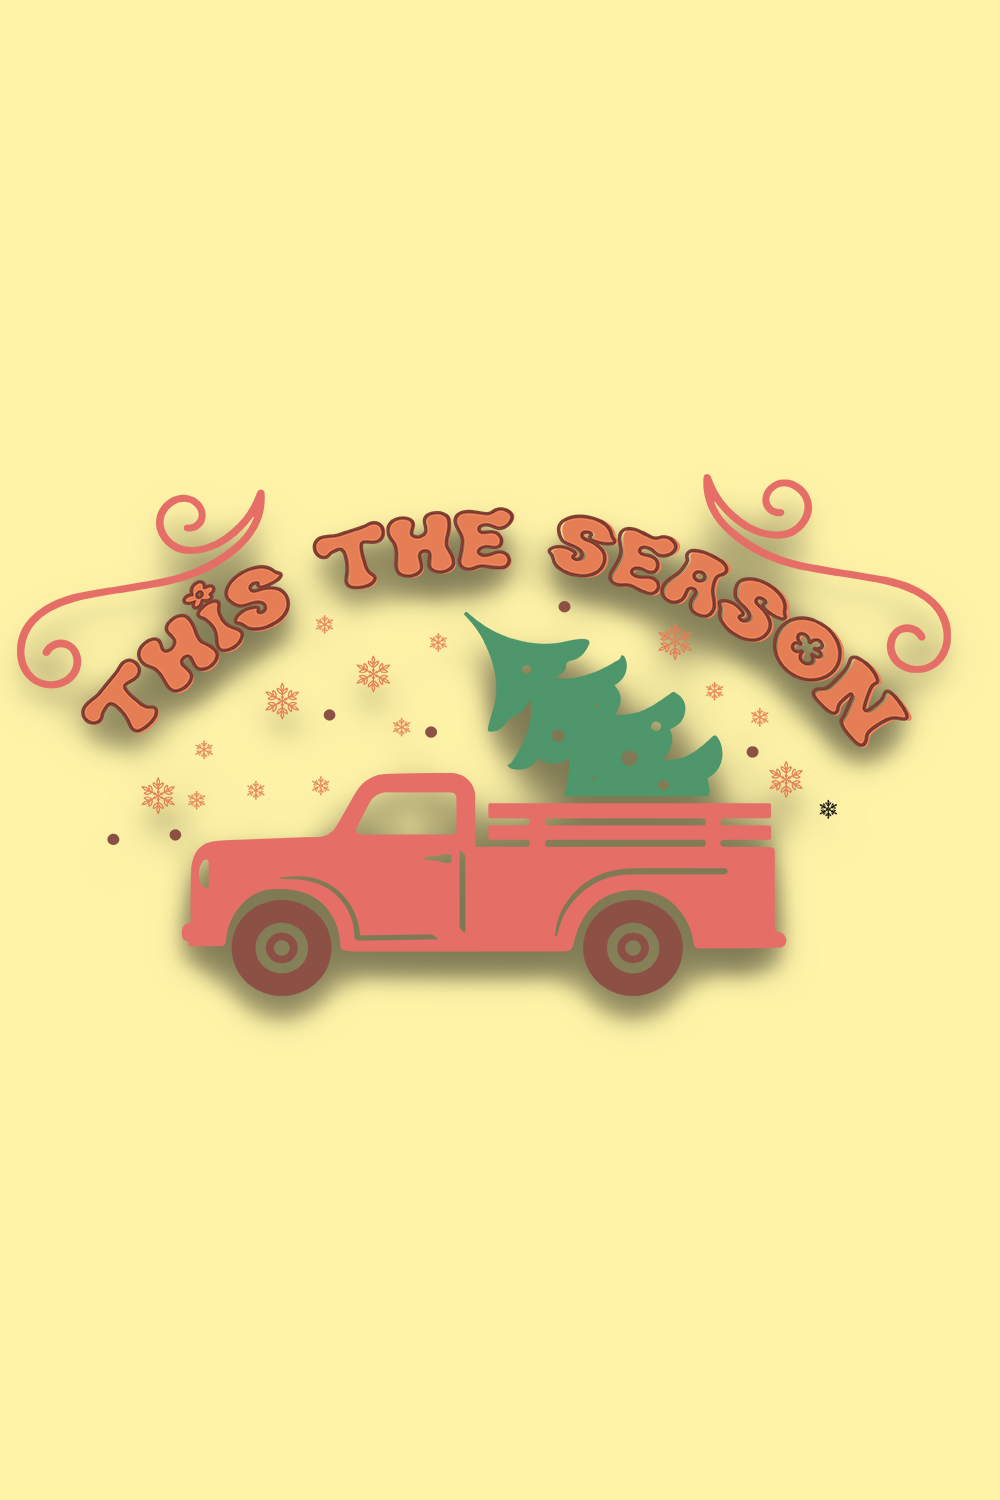 Tis The Season Christmas SVG Bundle, eps, dxf, ai, png, Files For Cricut pinterest preview image.